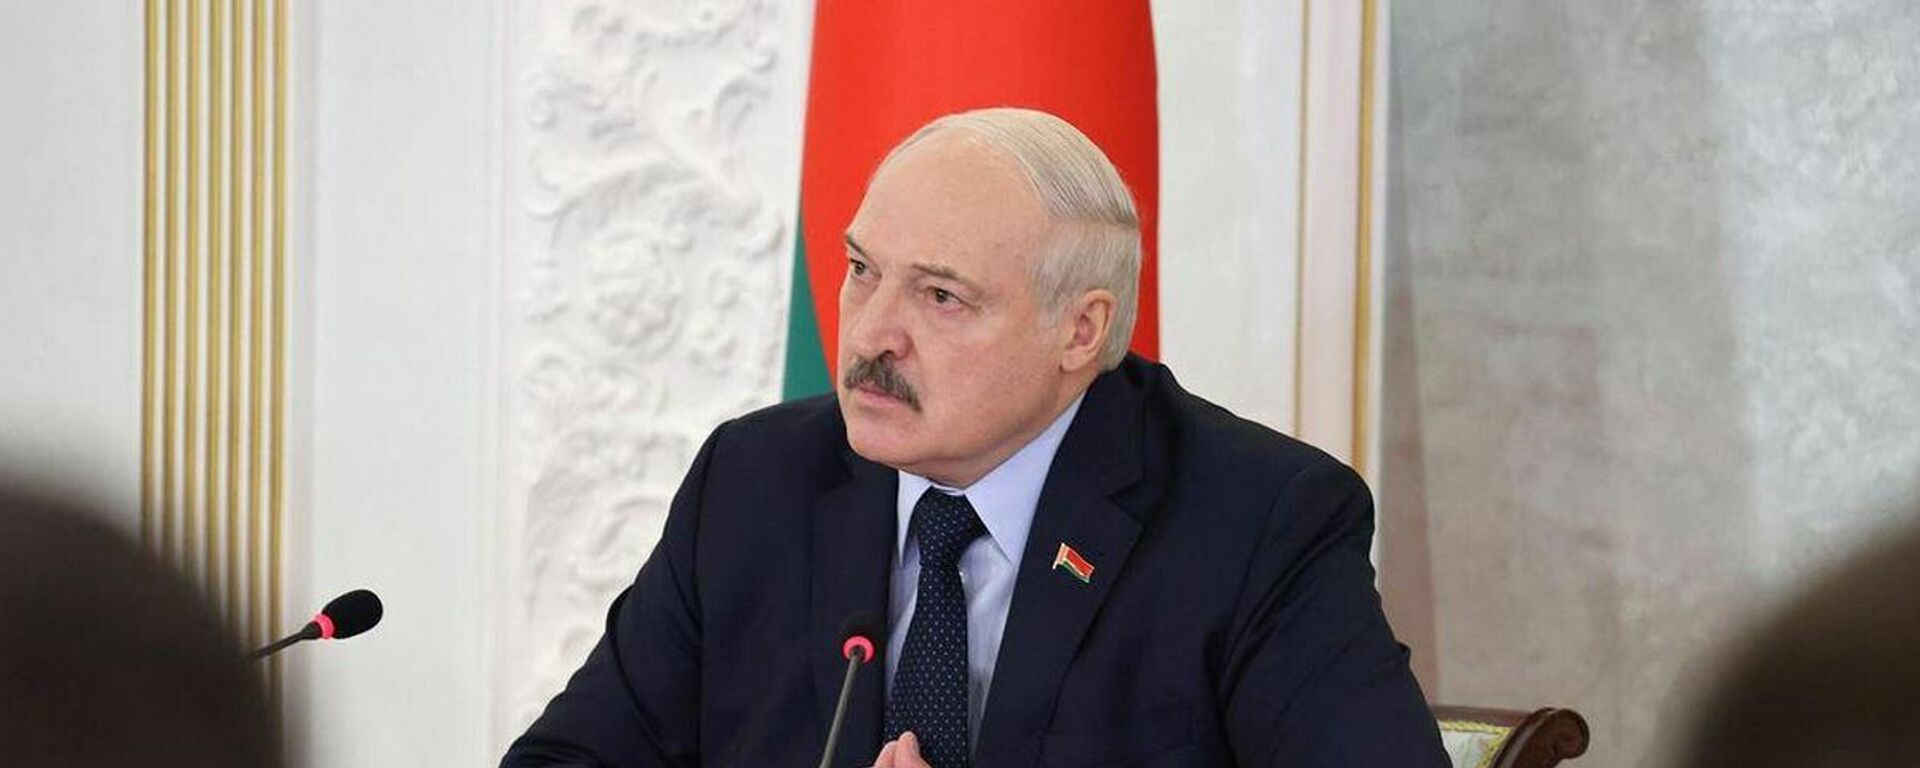 Президент Беларуси Александр Лукашенко - Sputnik Беларусь, 1920, 19.10.2021